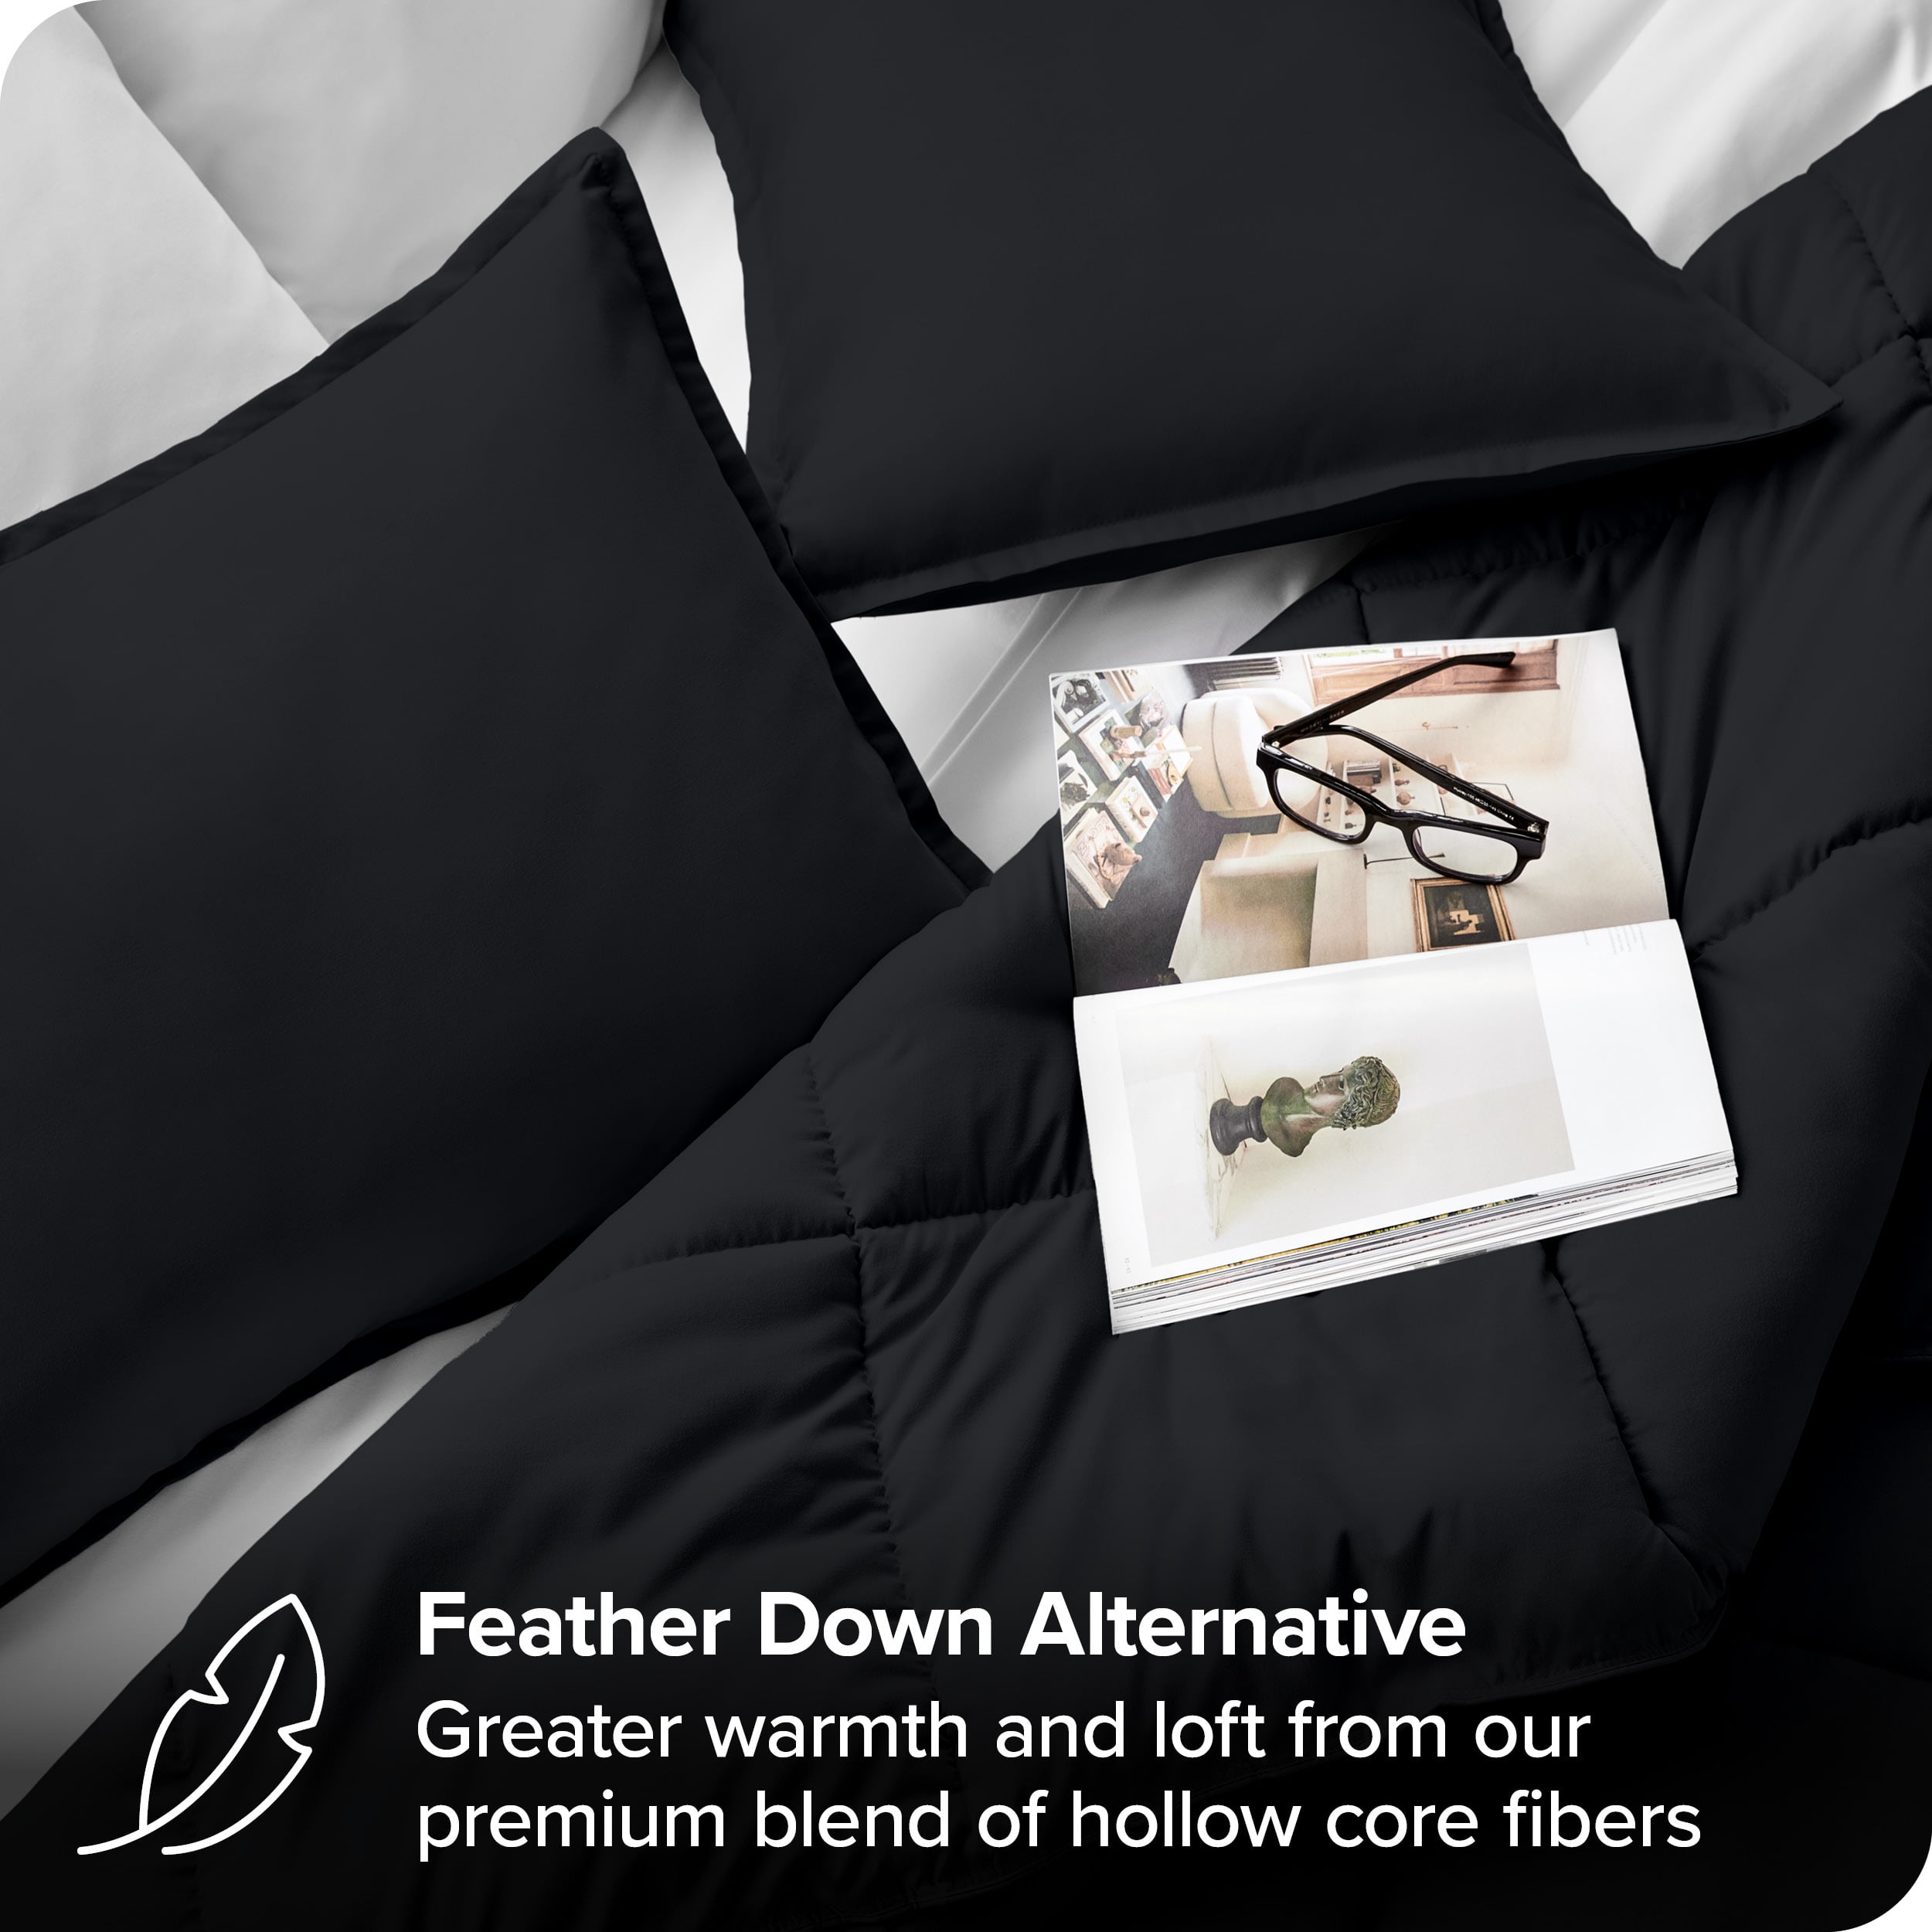 Bare Home Goose Down Alternative Comforter Set - Premium 1800